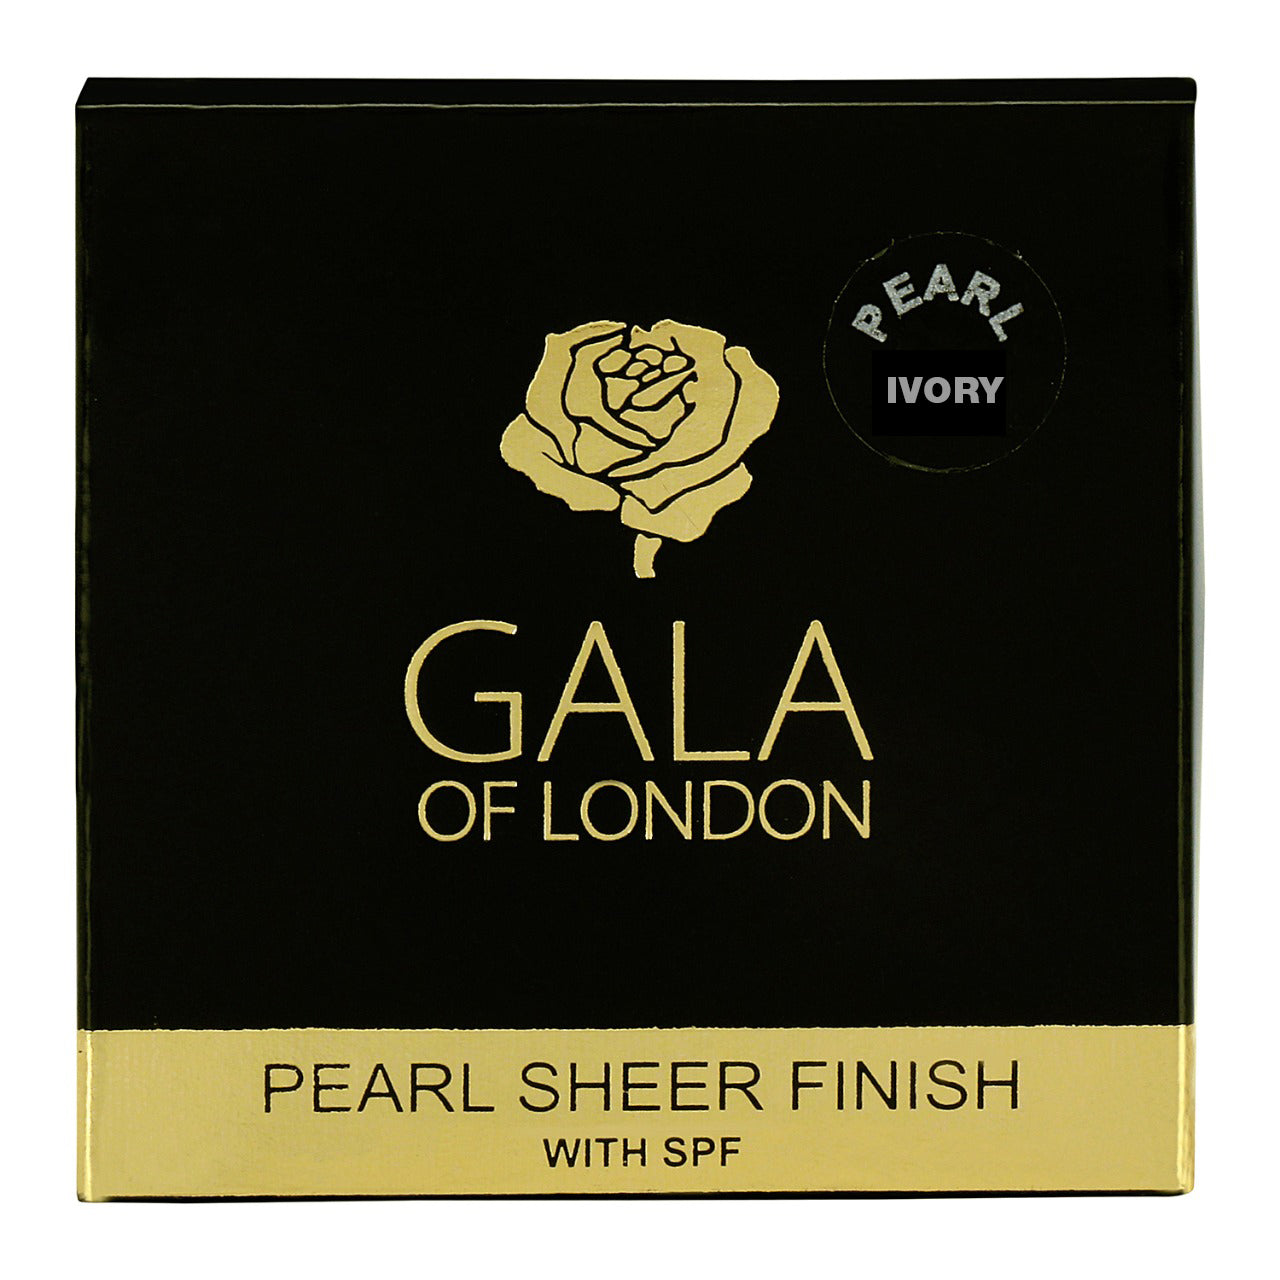 Gala of London Pearl Sheer Finish 12g - Ivory